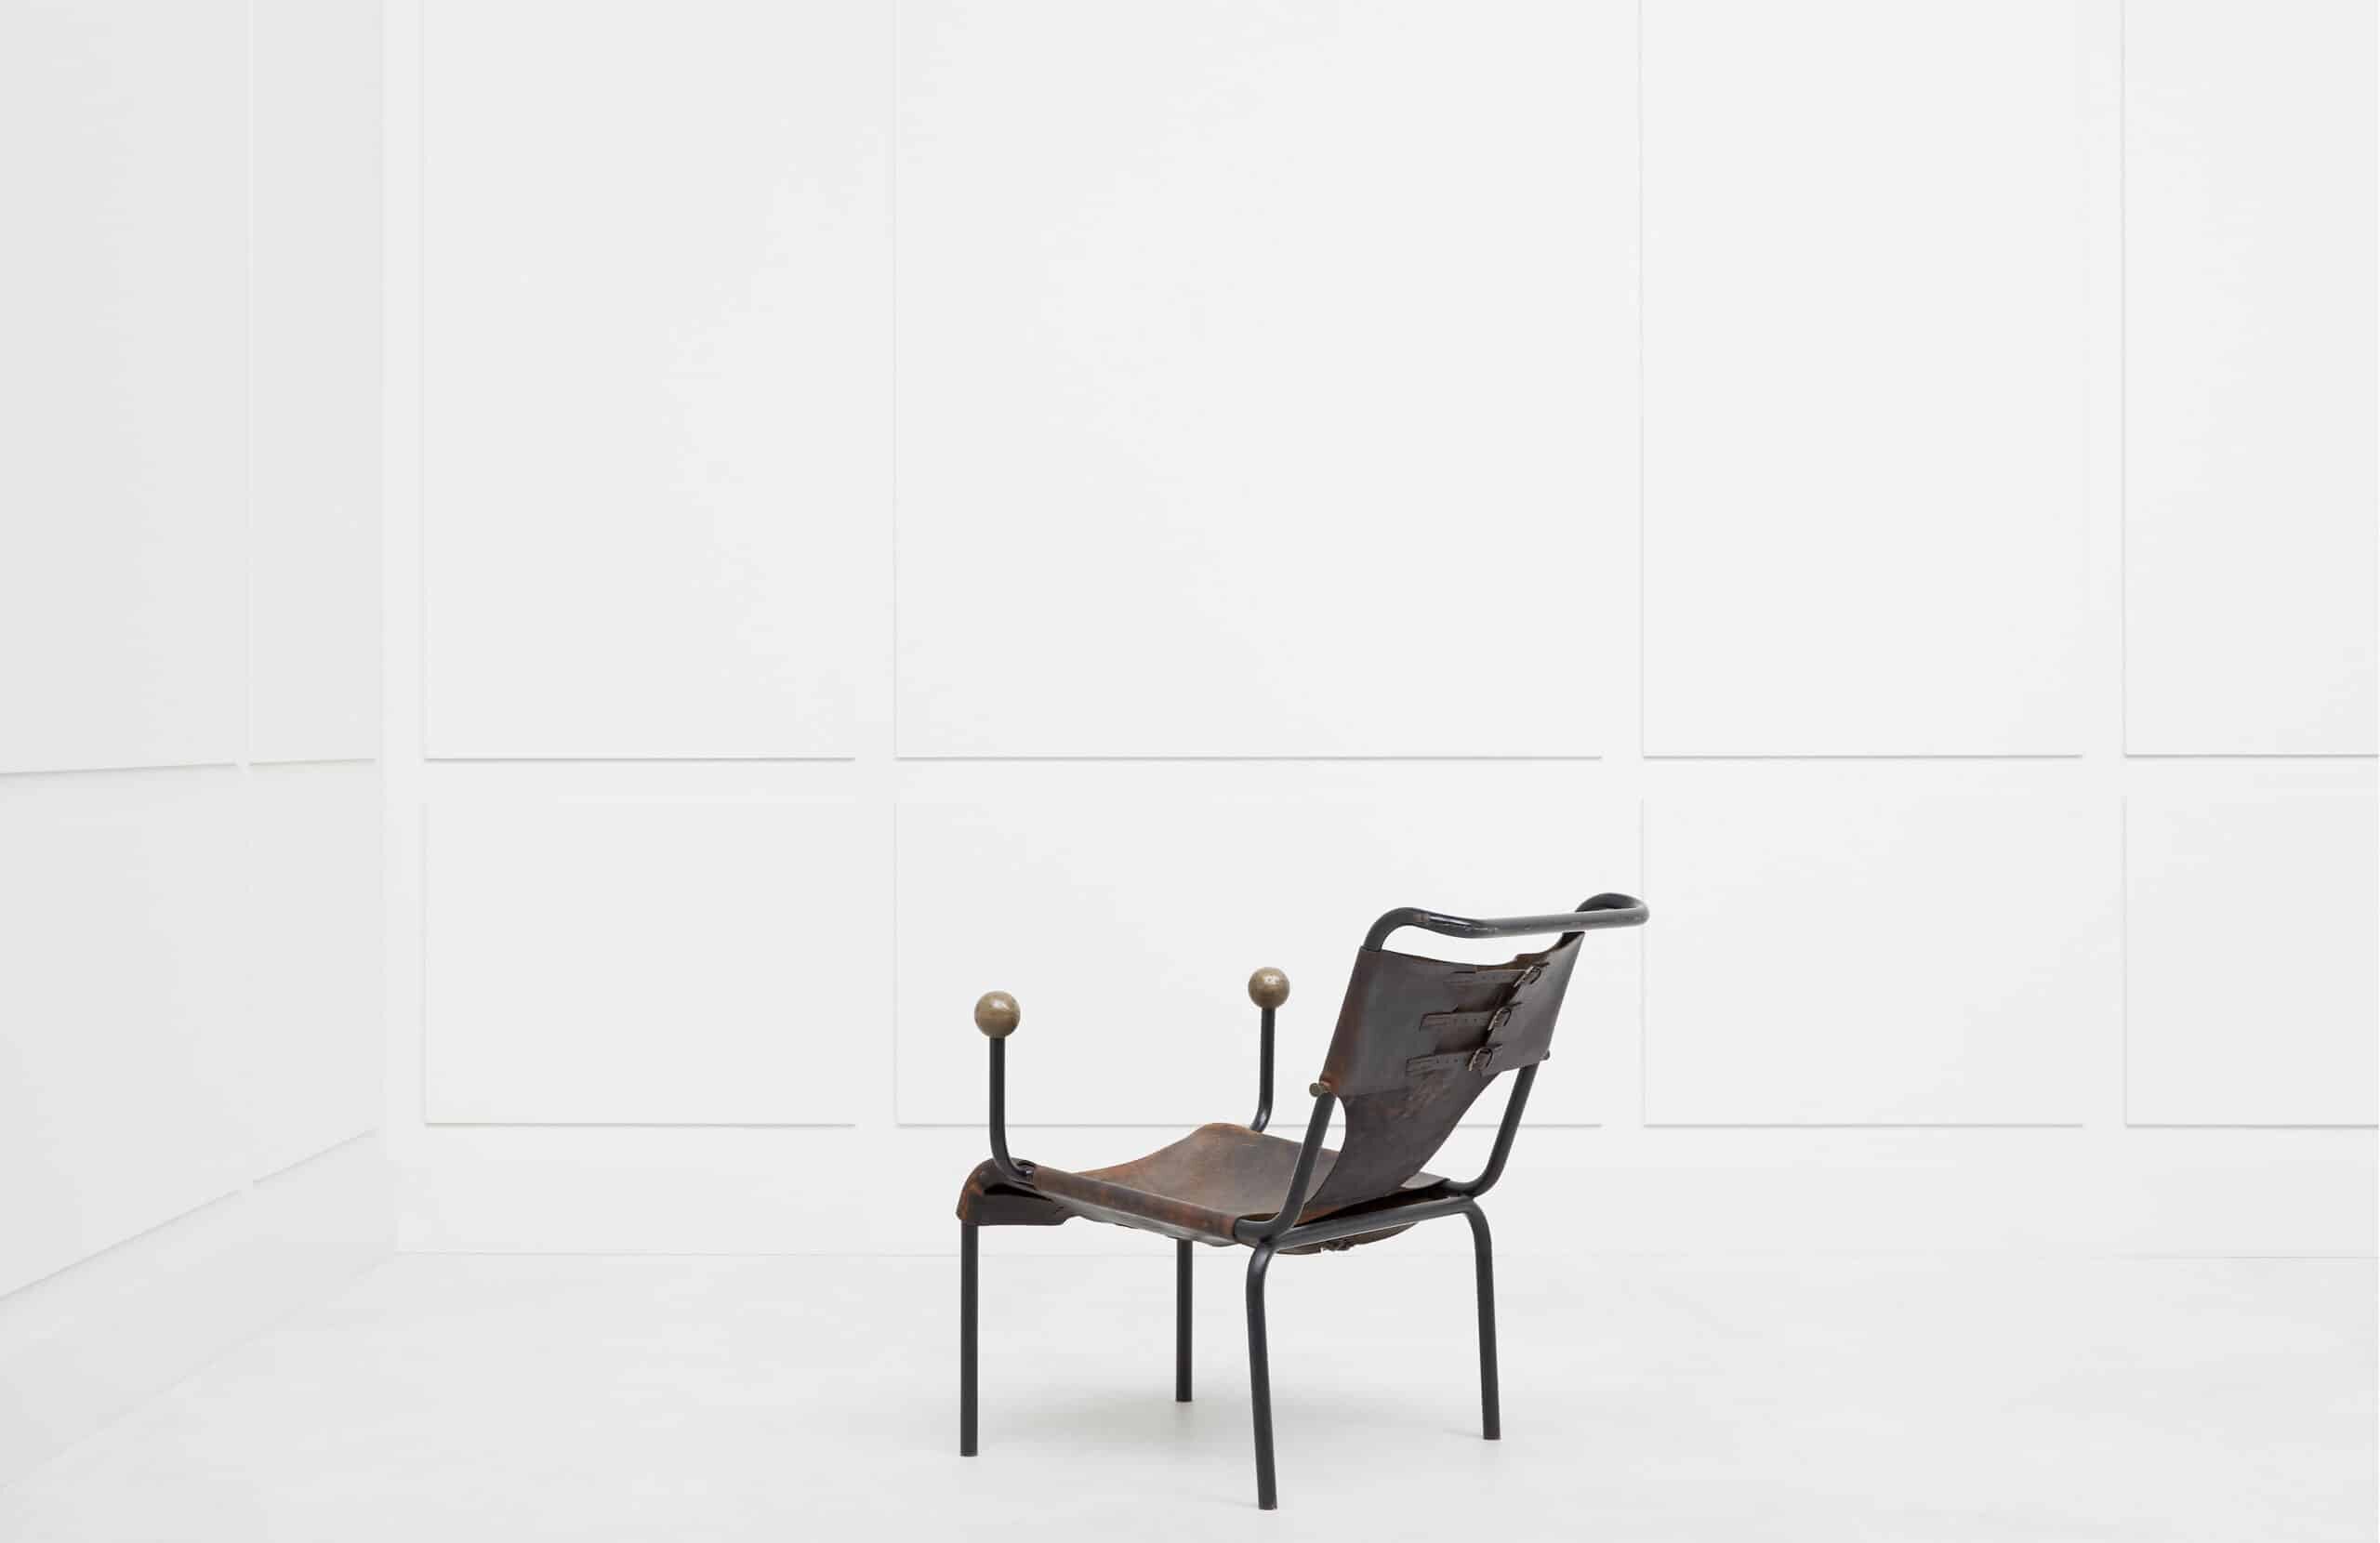 Lina Bo Bardi, Rare and original “Bola” chair, vue 01